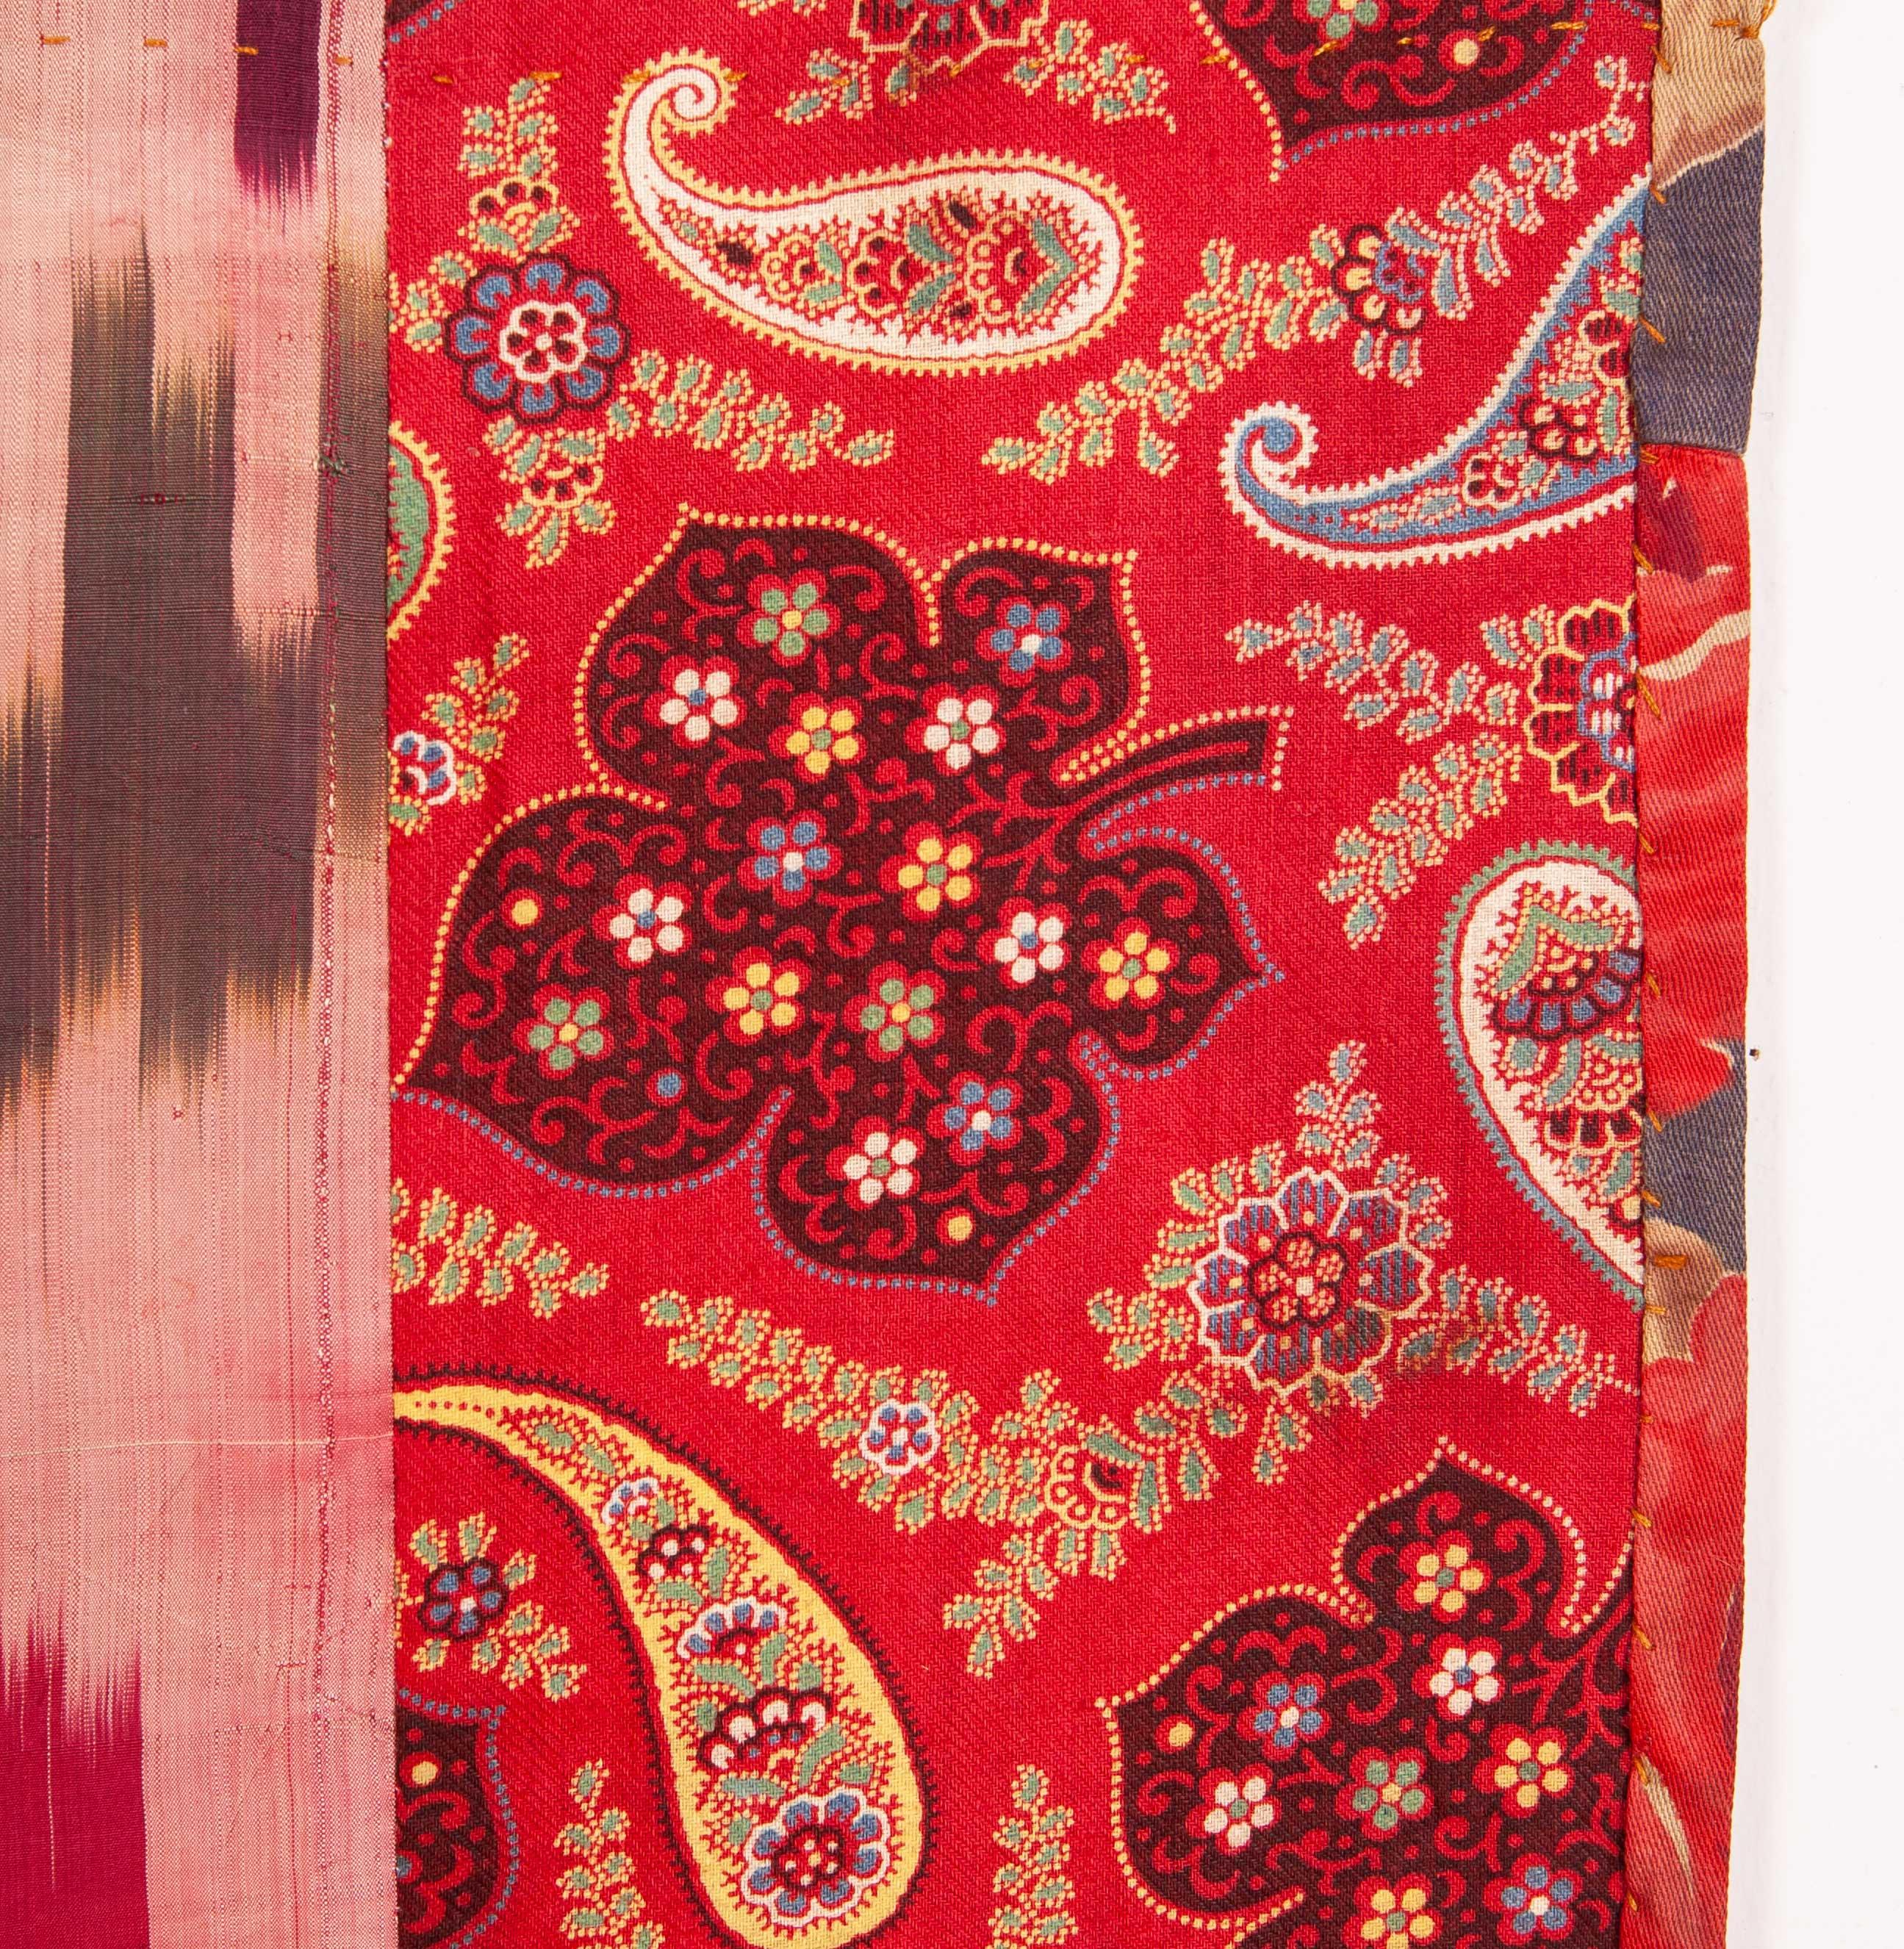 Uzbek Antique Silk Ikat Panel, Early 20th Century